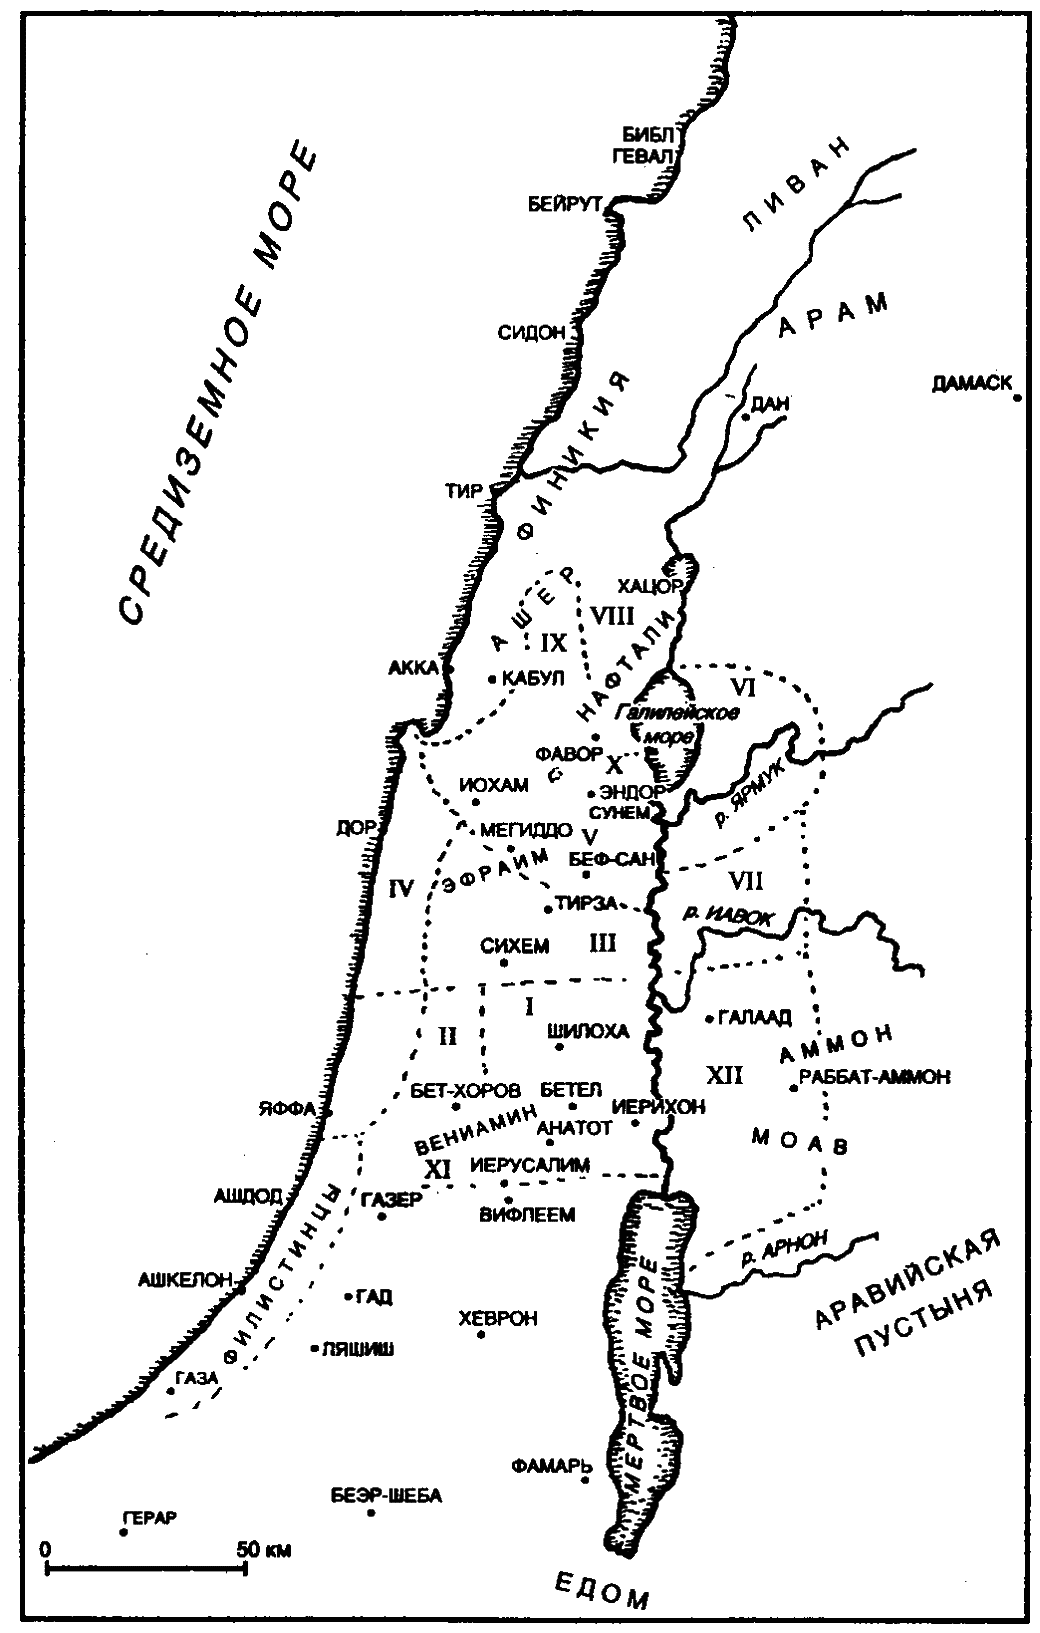 Где на карте библ сидон и тир. Карта Палестины времен Христа. Тир и Сидон Палестина на карте. Генисаретская земля во времена Иисуса.